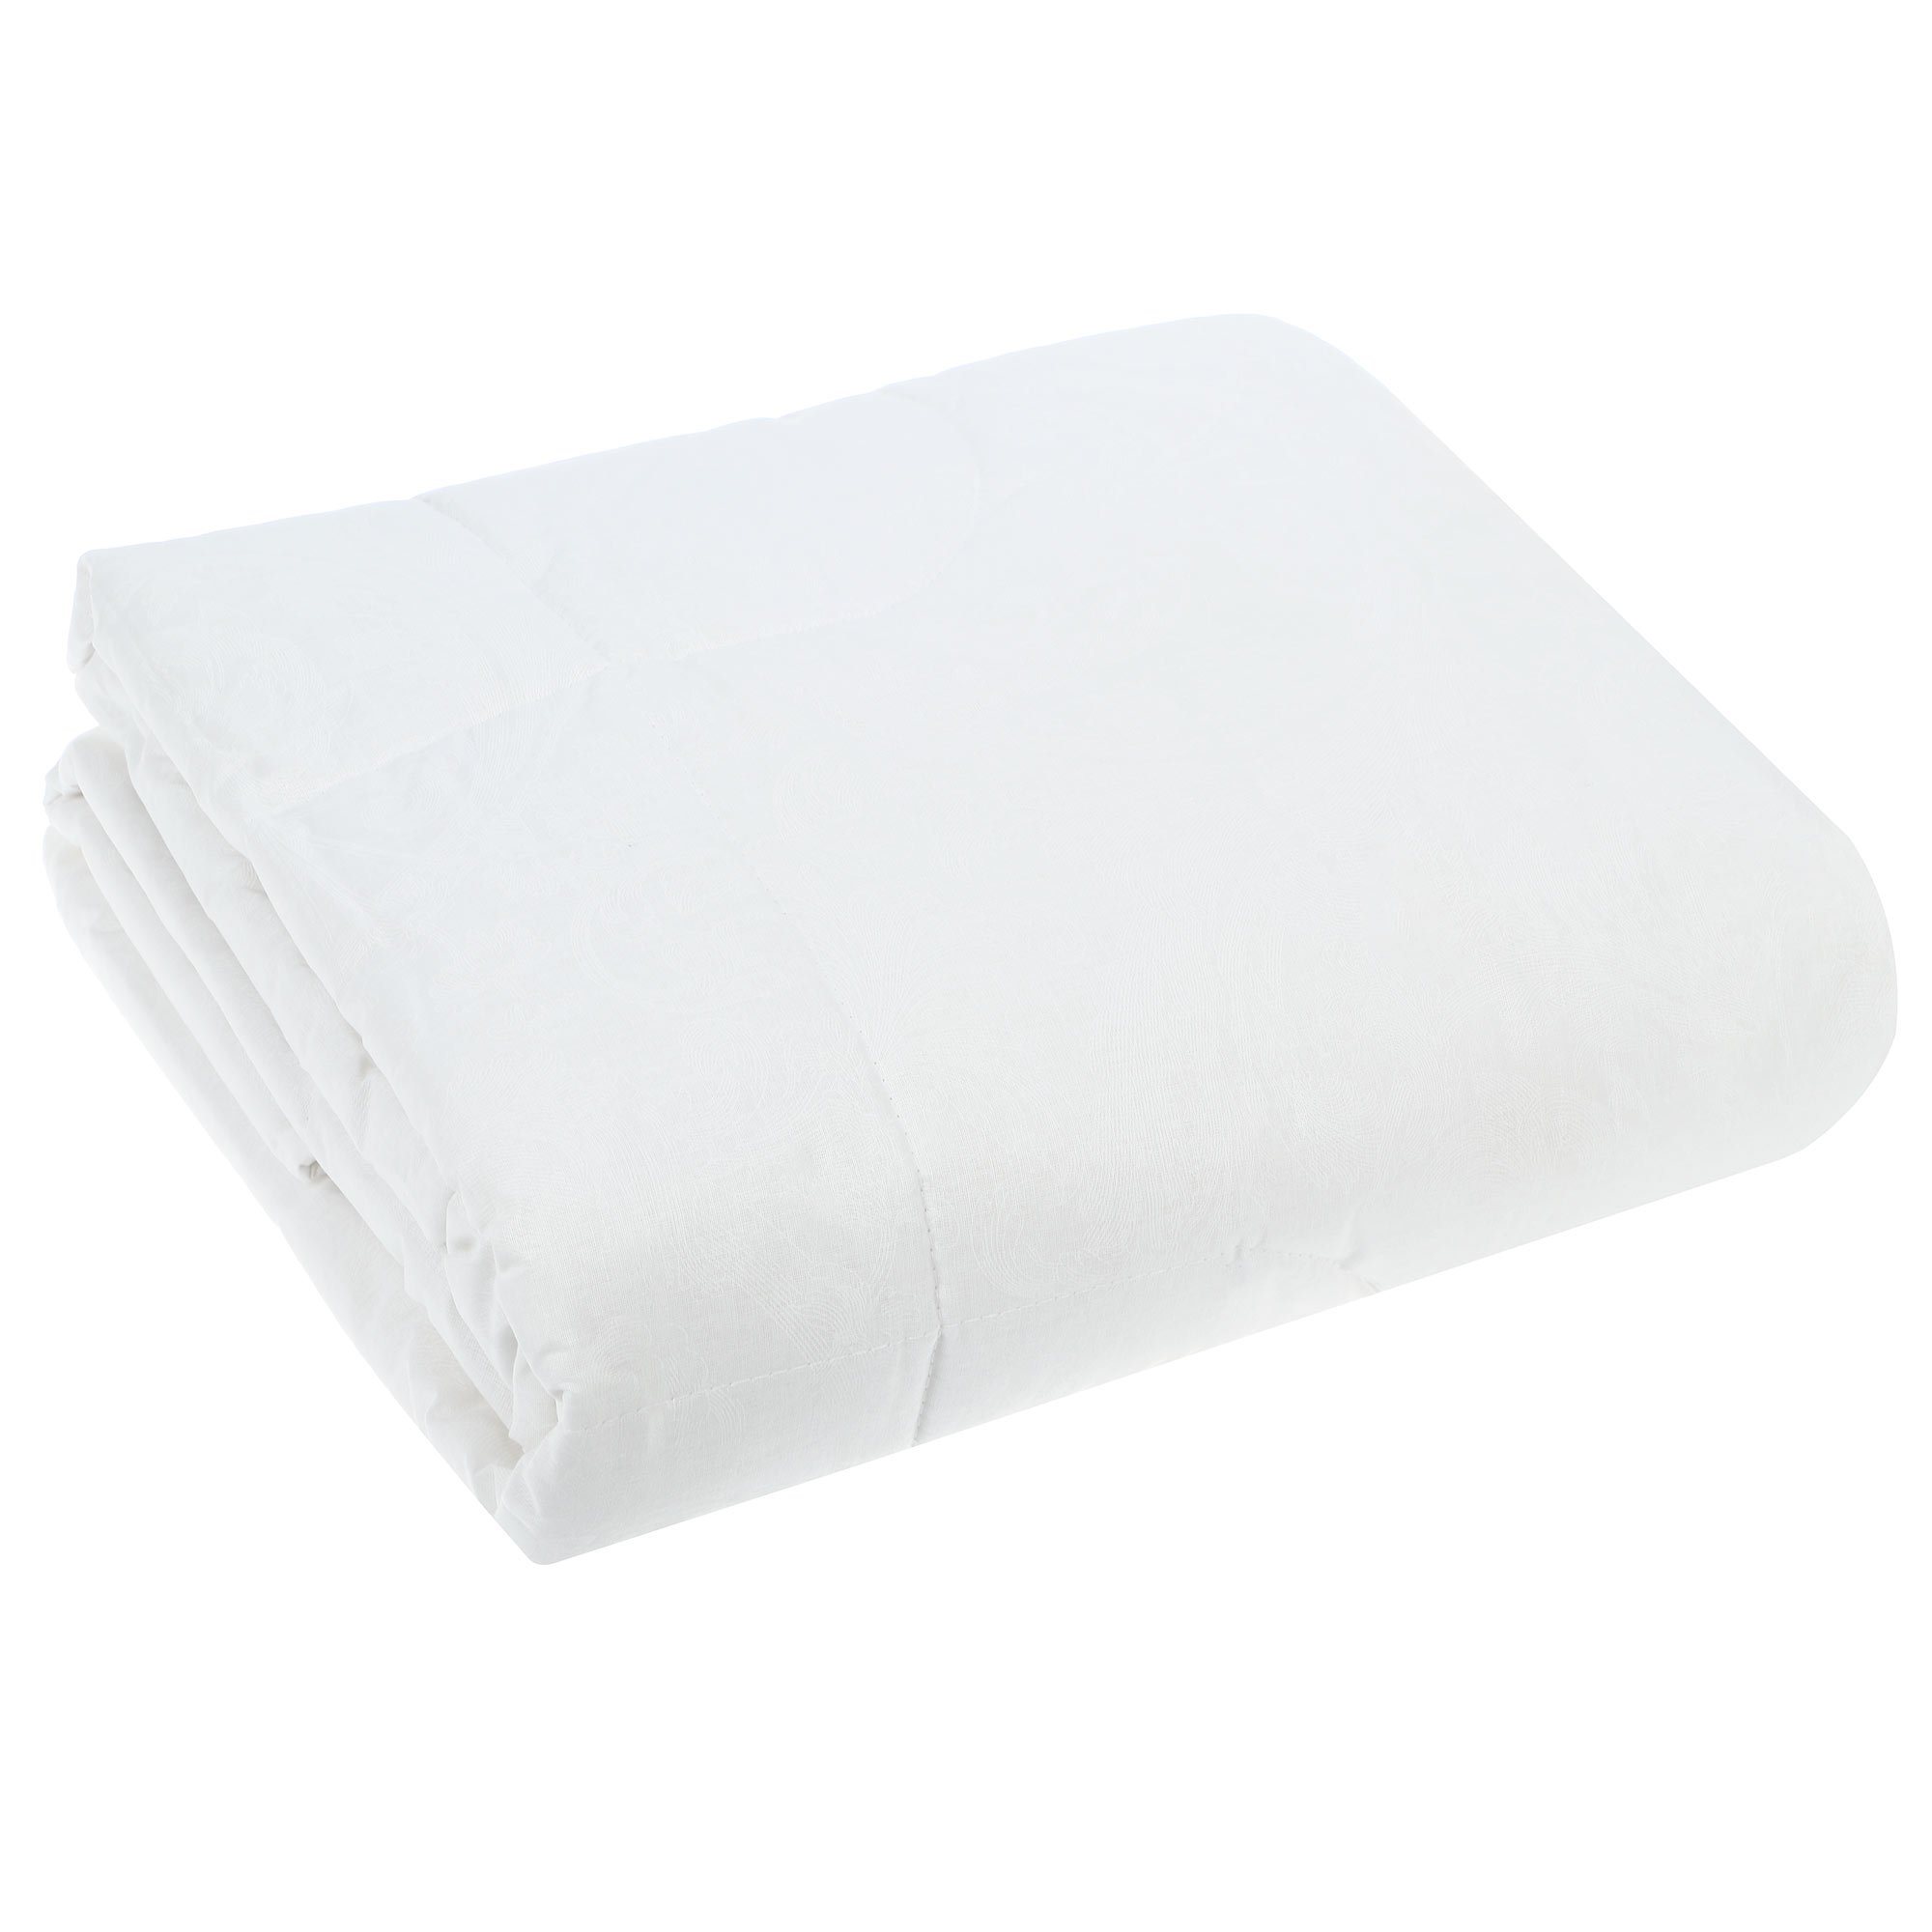 Одеяло Medsleep White Cloud белое 140х200 см, цвет белый - фото 1